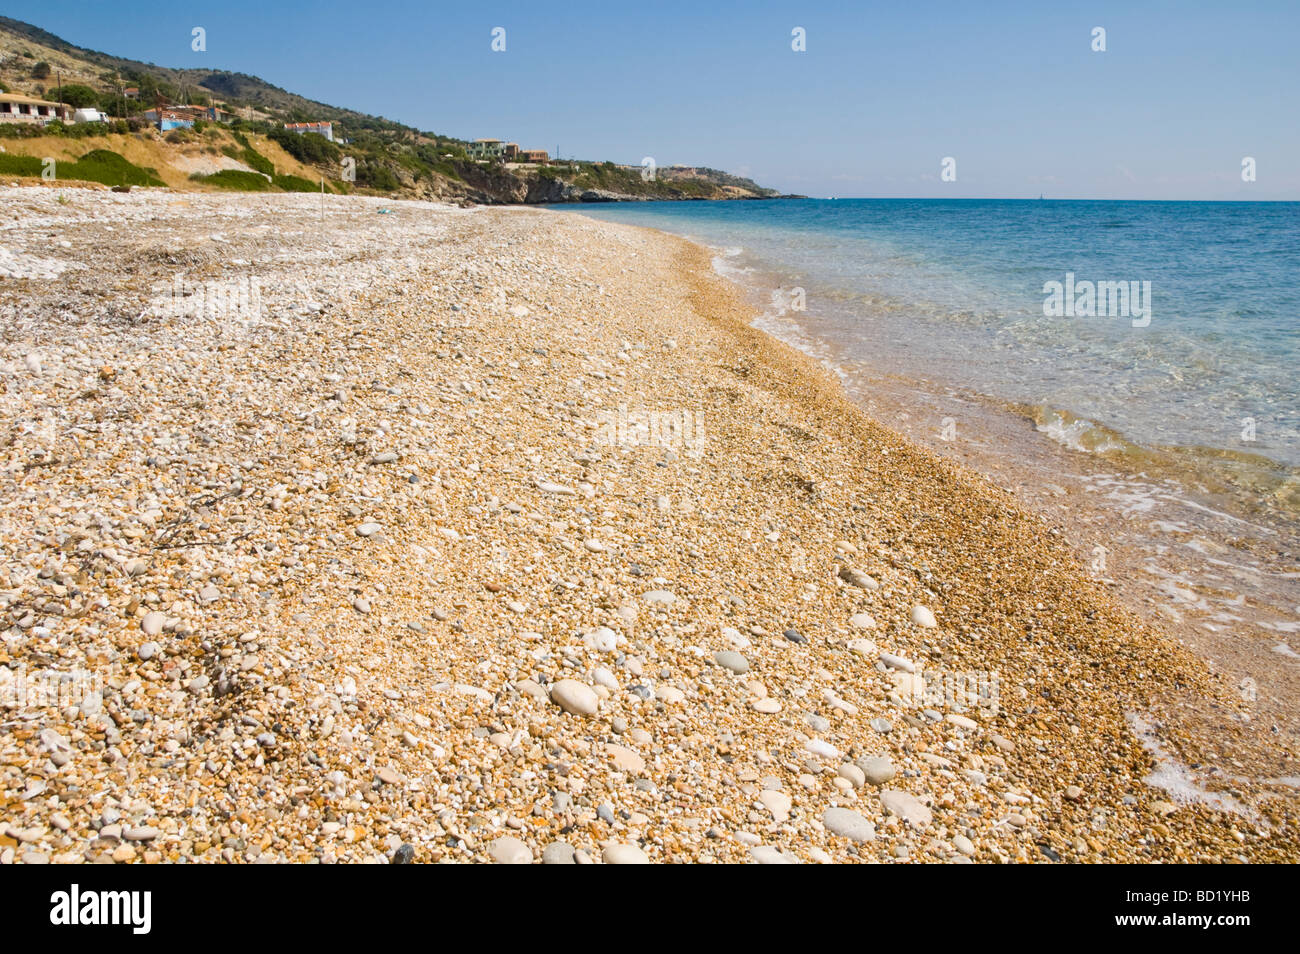 Pebble and shingle beach at Skala on the Greek island of Kefalonia Greece GR Stock Photo